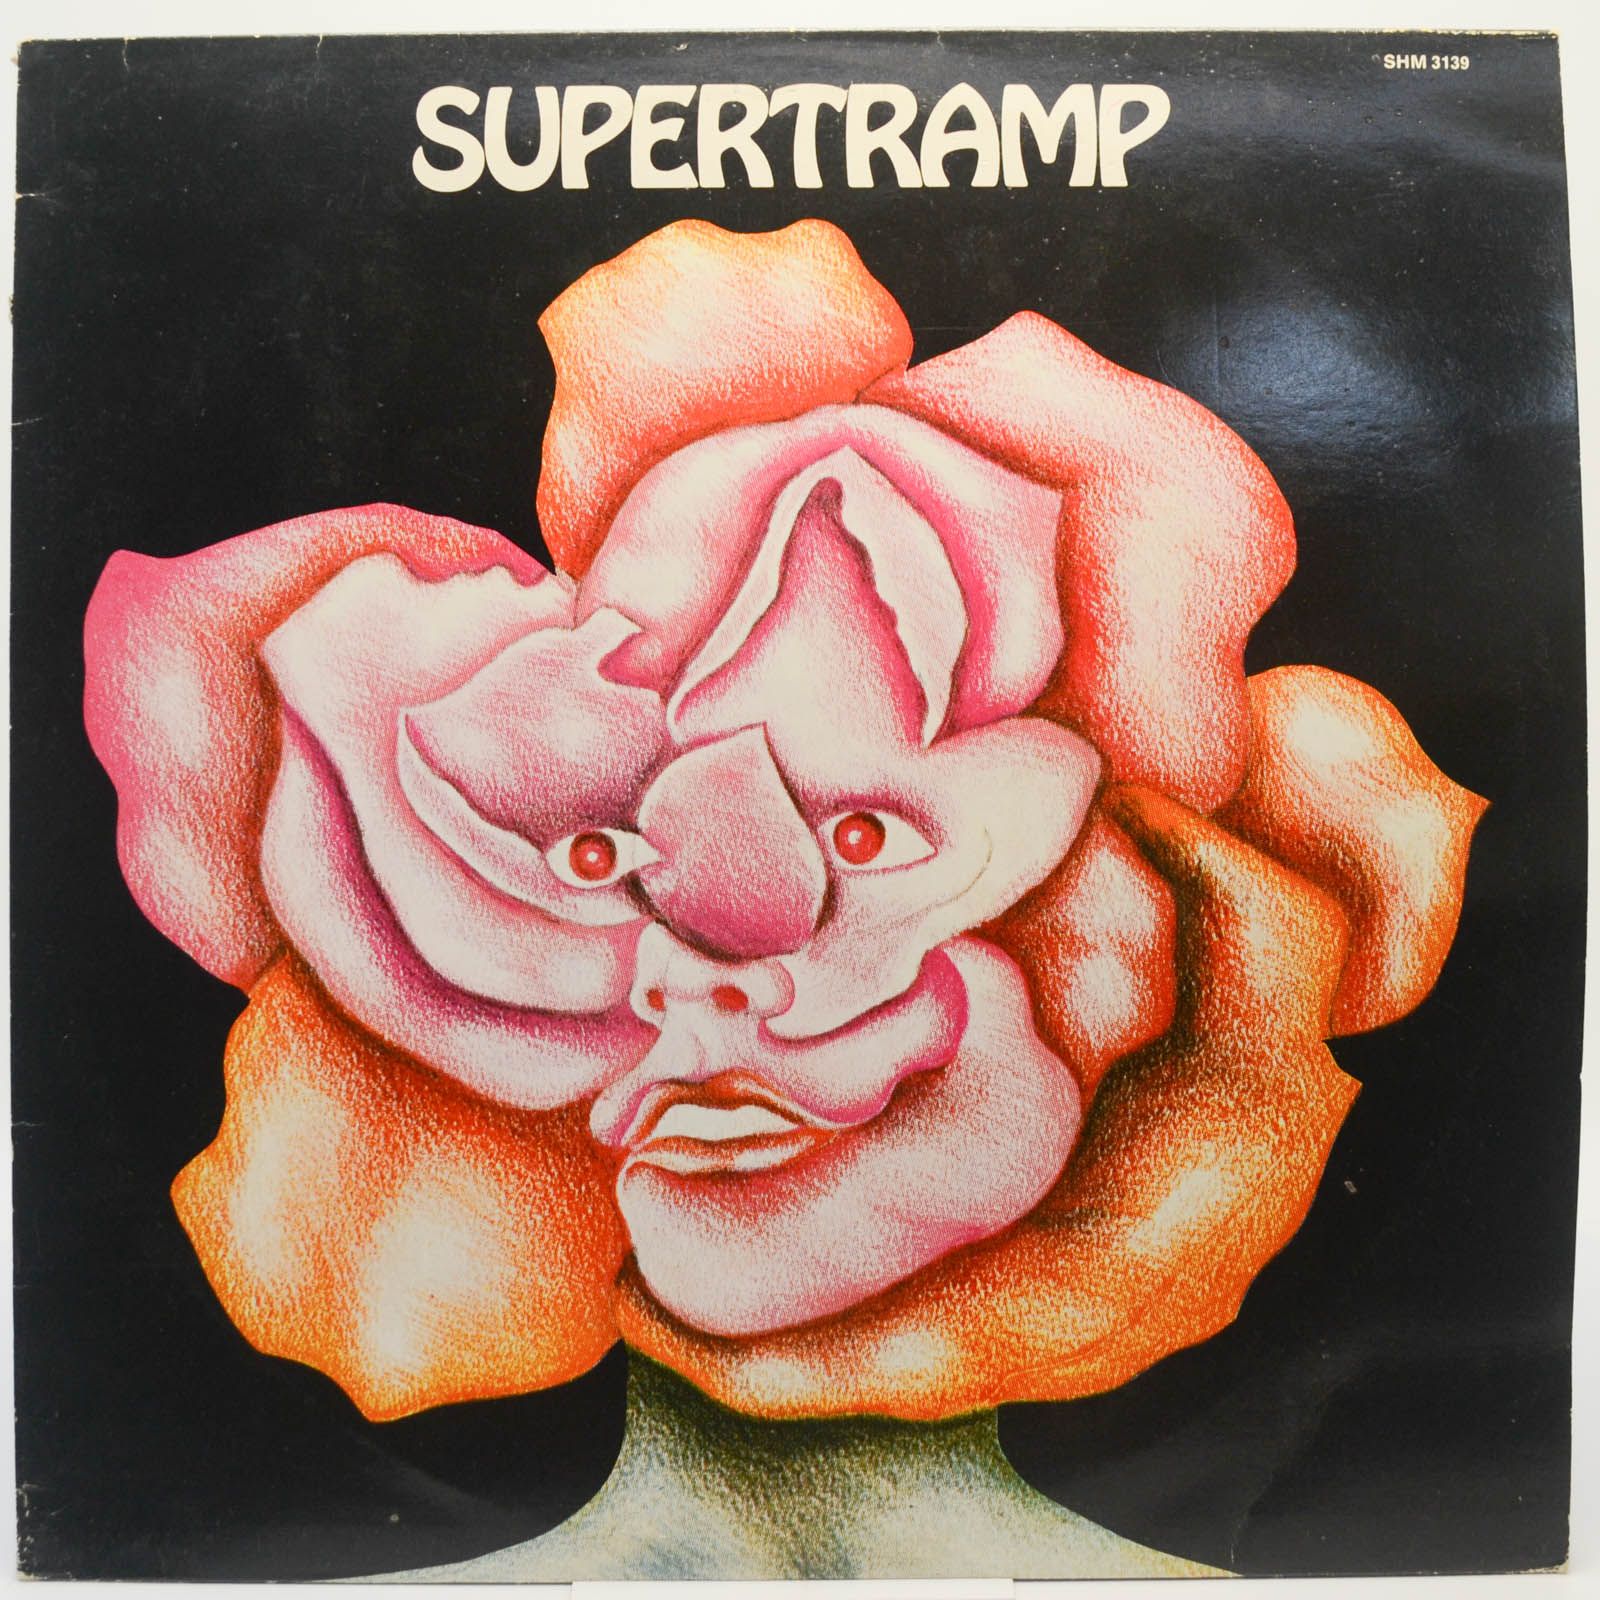 Supertramp — Supertramp (UK), 1970